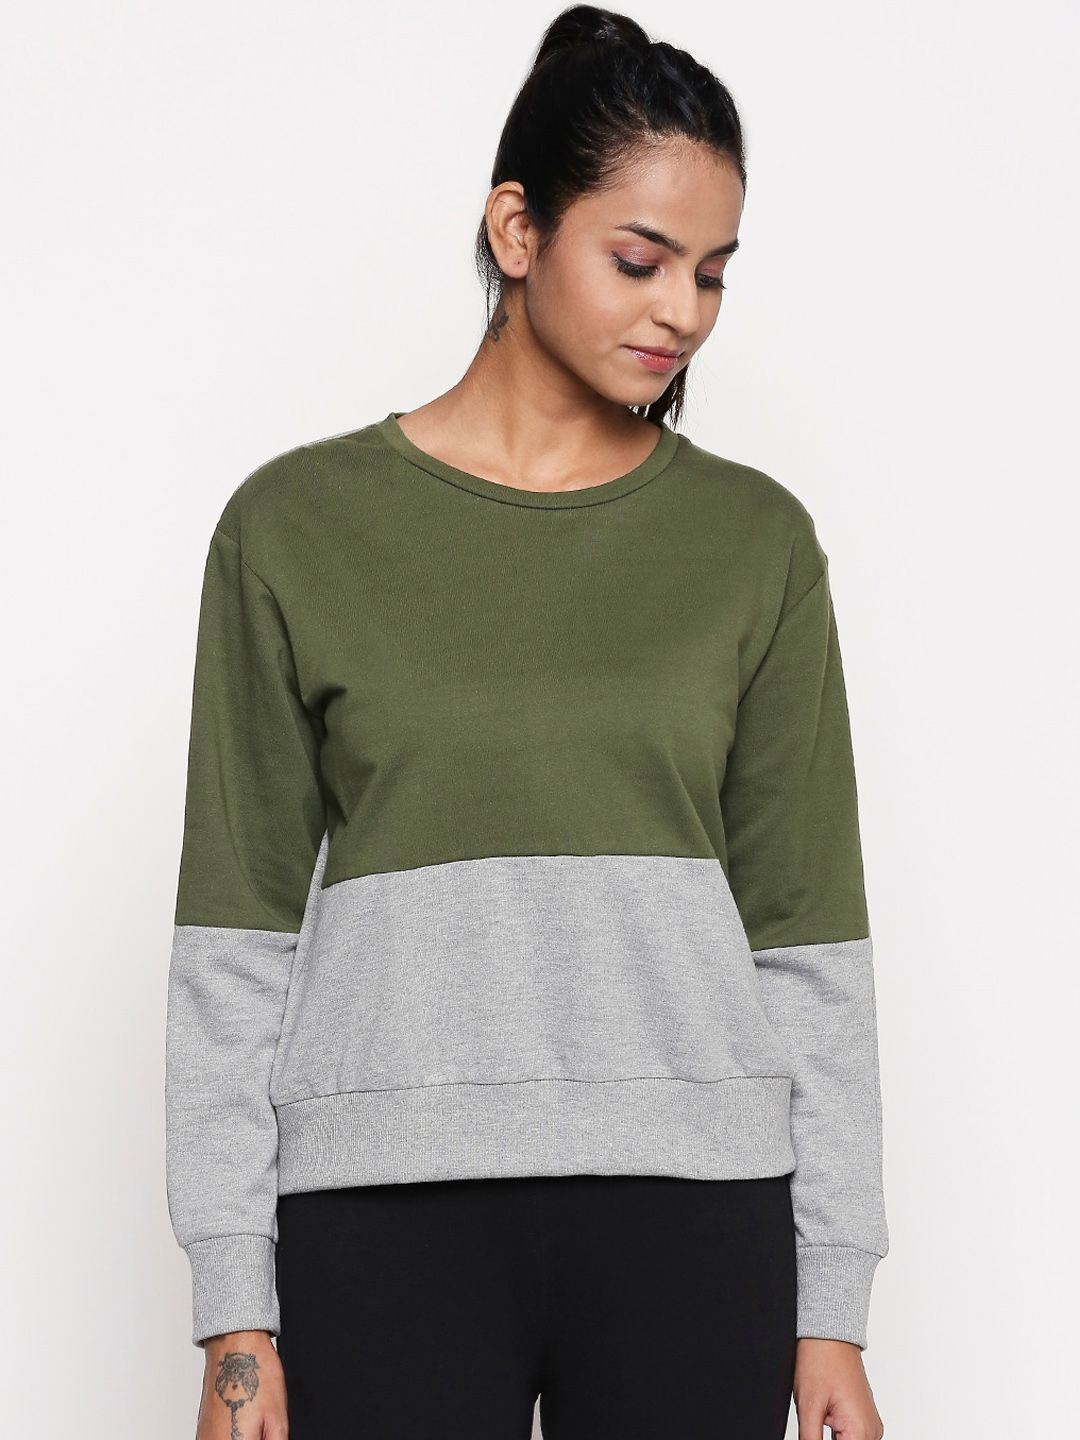 Ajile by Pantaloons Women Olive Green Colourblocked Sweatshirt Price in India